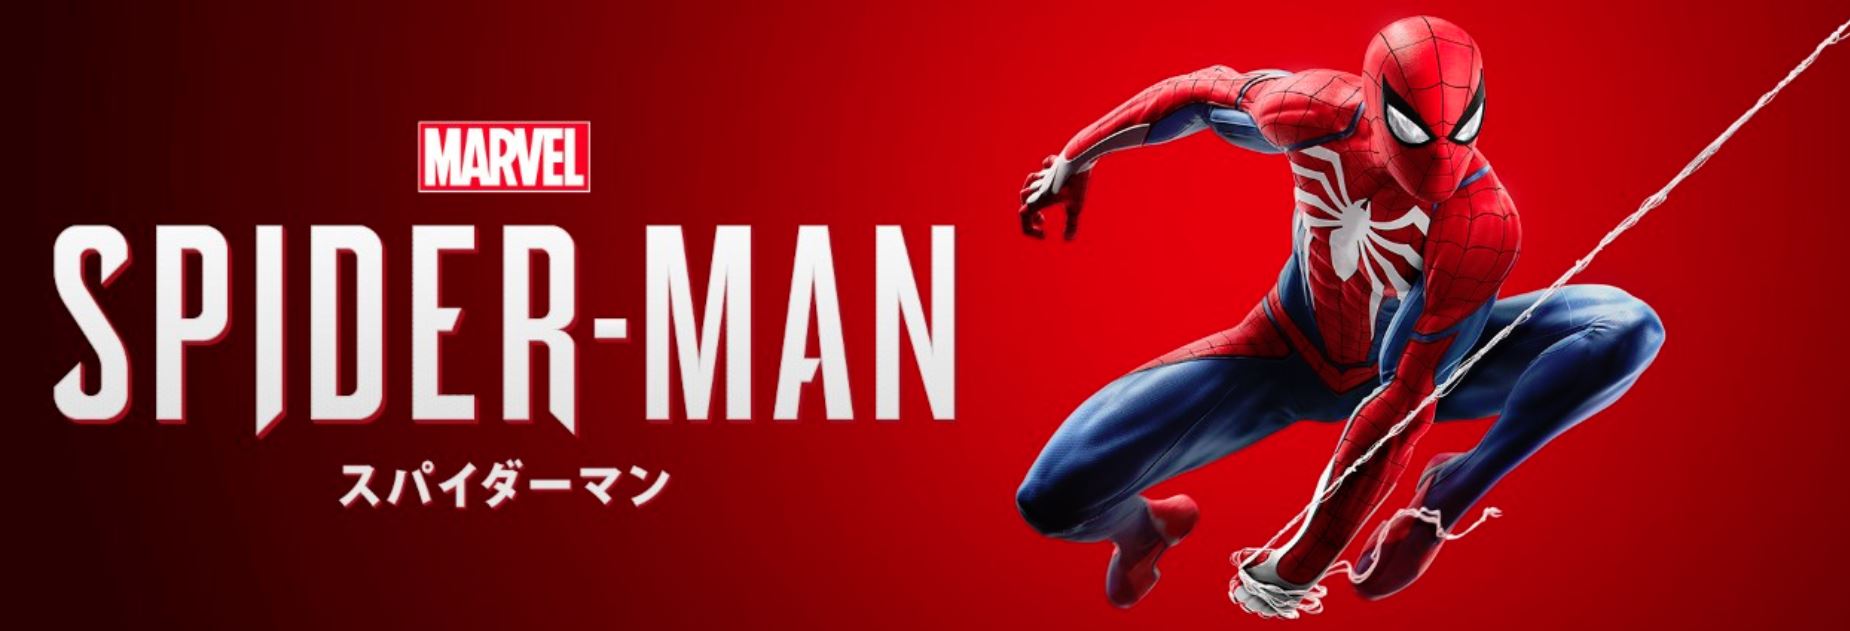 Ps4 マーベルスパイダーマンの売上 実売 が絶好調 2週目も破竹の勢い とあるゲームブログの軌跡